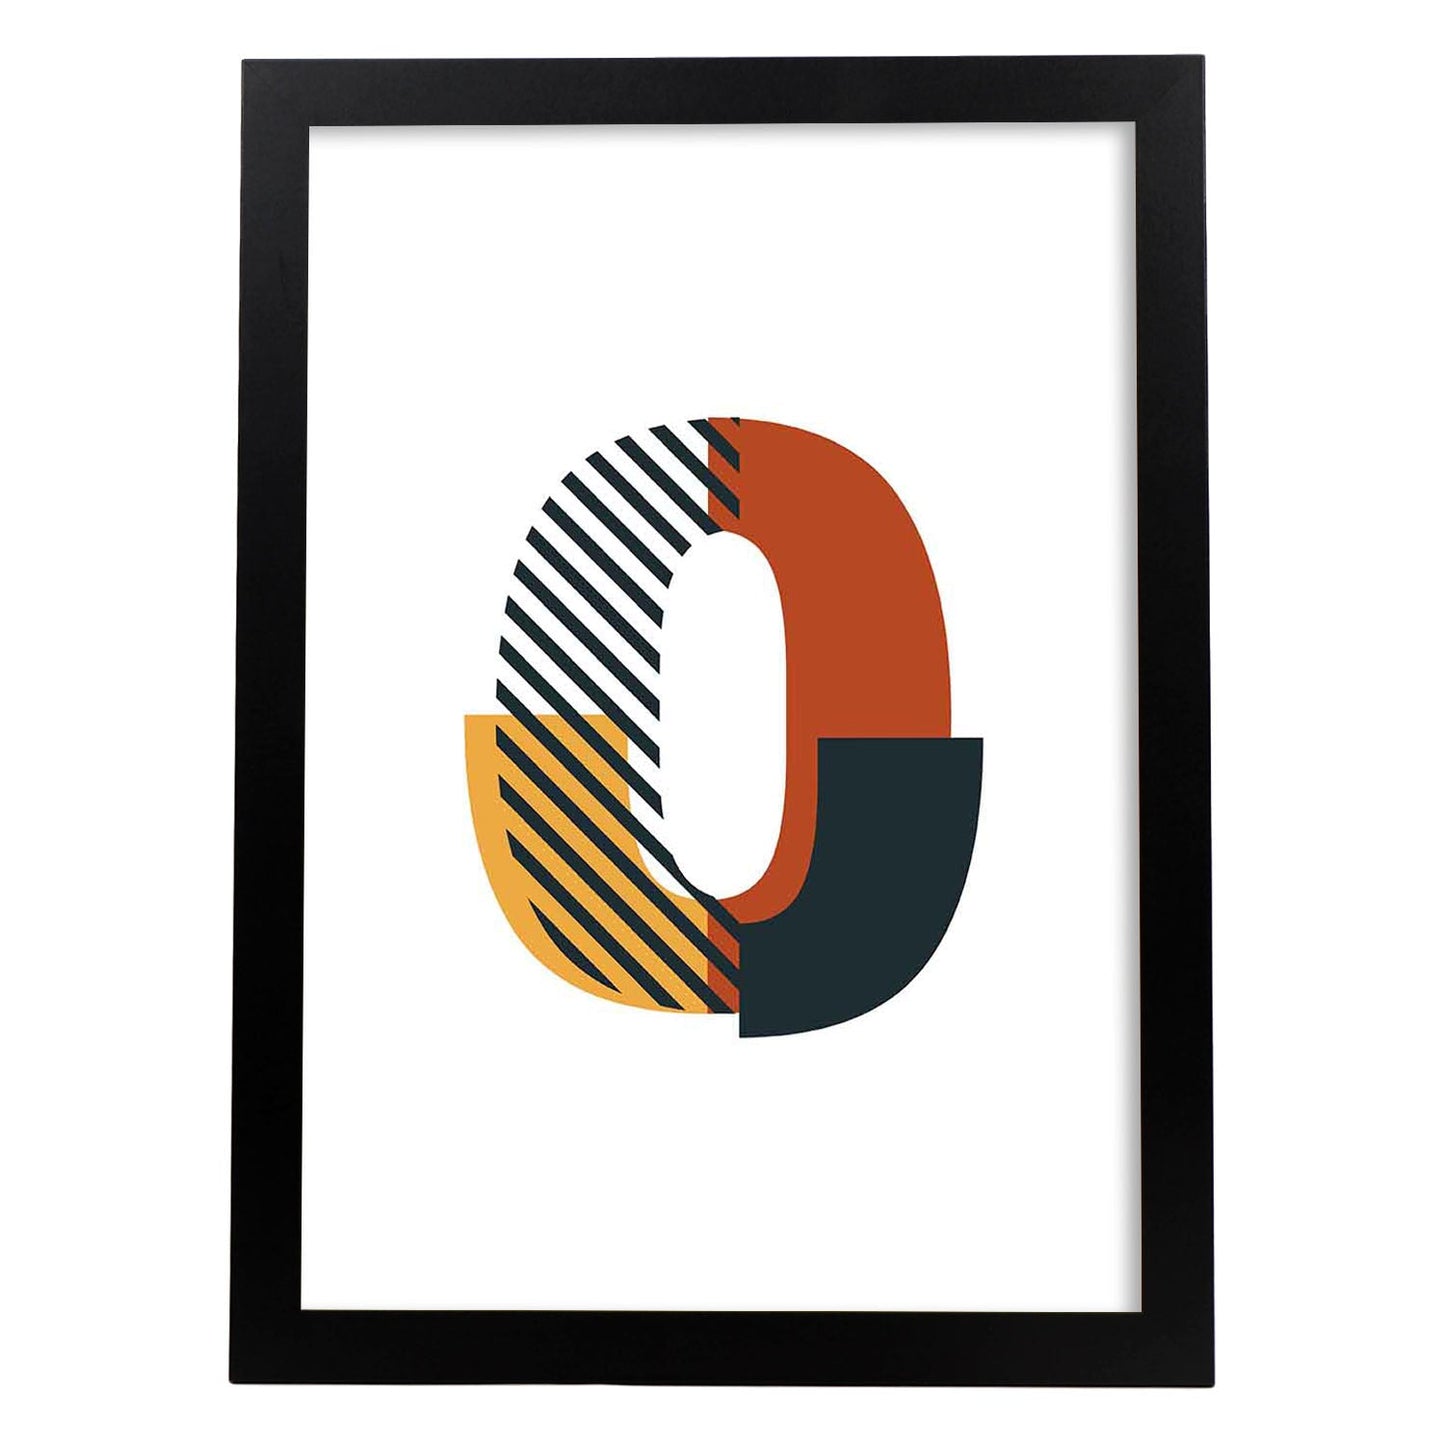 Poster de número 0. Lámina estilo Geometria con imágenes del alfabeto.-Artwork-Nacnic-A4-Marco Negro-Nacnic Estudio SL